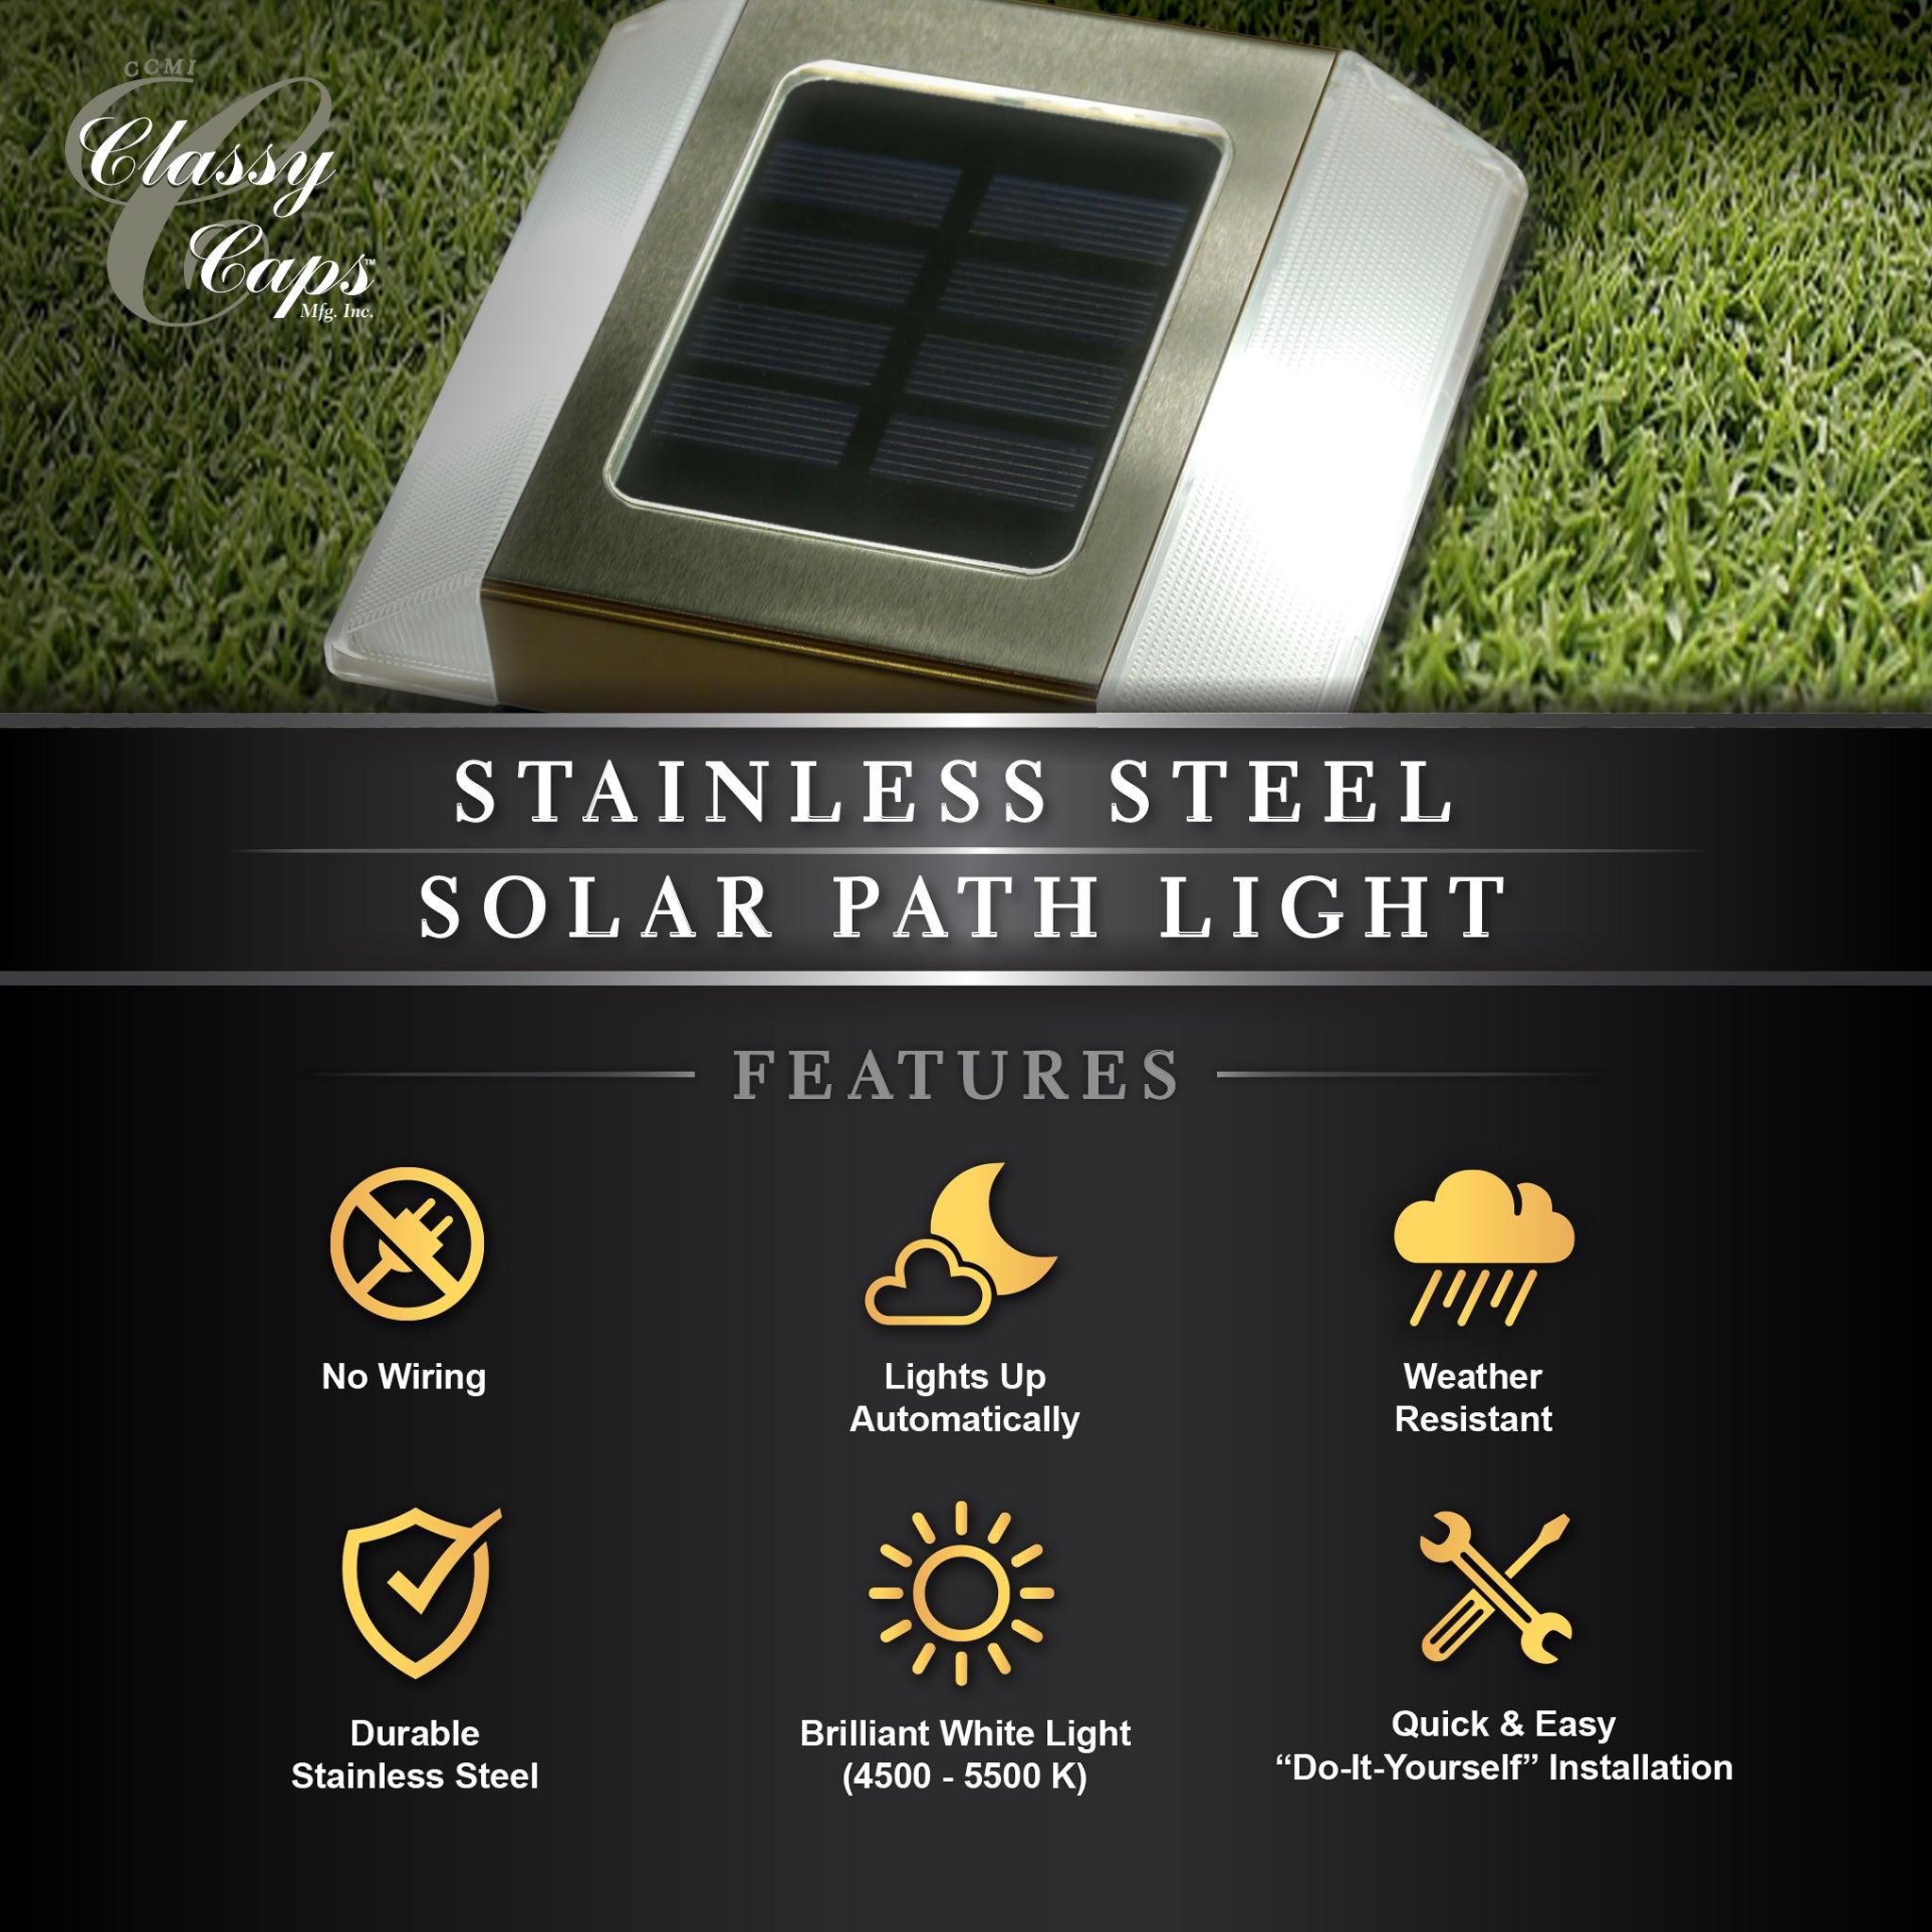 Stainless Steel Solar Path Light